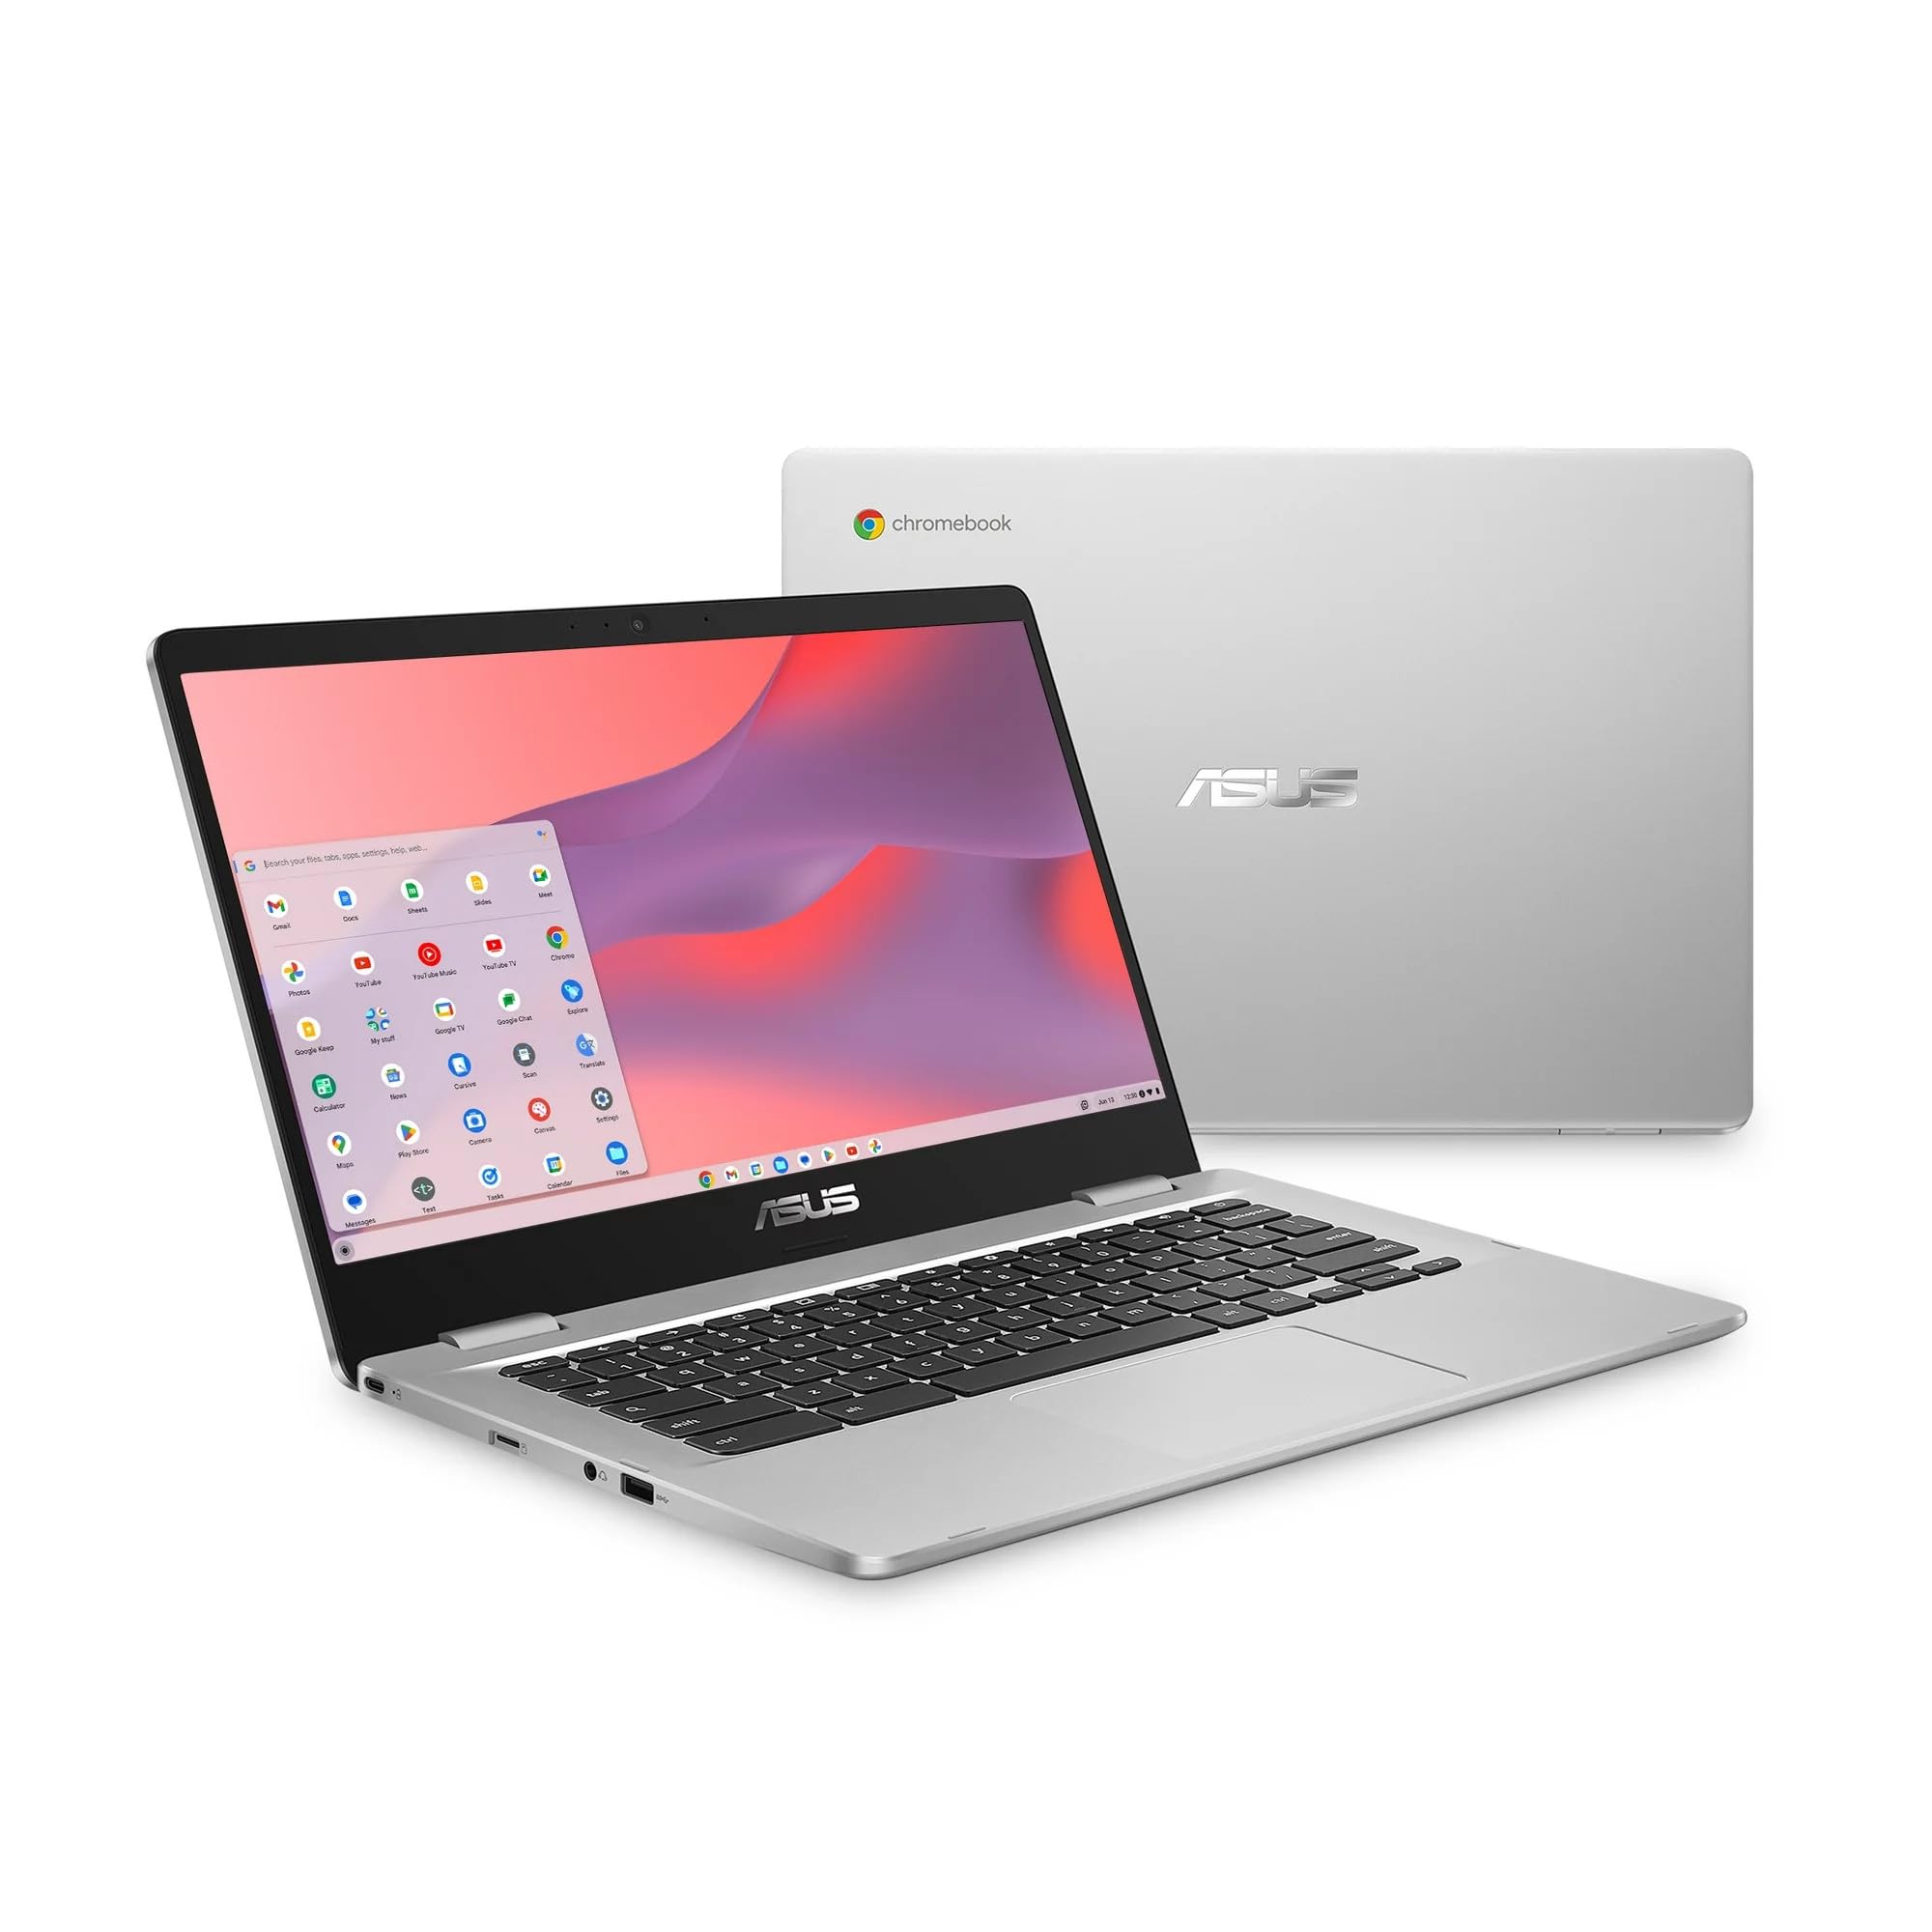 ASUS Flagship Chromebook 14 FHD Student Laptop, Intel Celeron N4020 Up to 2.8GHz, 4GB RAM, 192GB Storage (64GB eMMC+128GB MSD Card), Wi-Fi, Webcam, Bluetooth, Zoom Meeting, 10 Hours Battery, Chrome OS